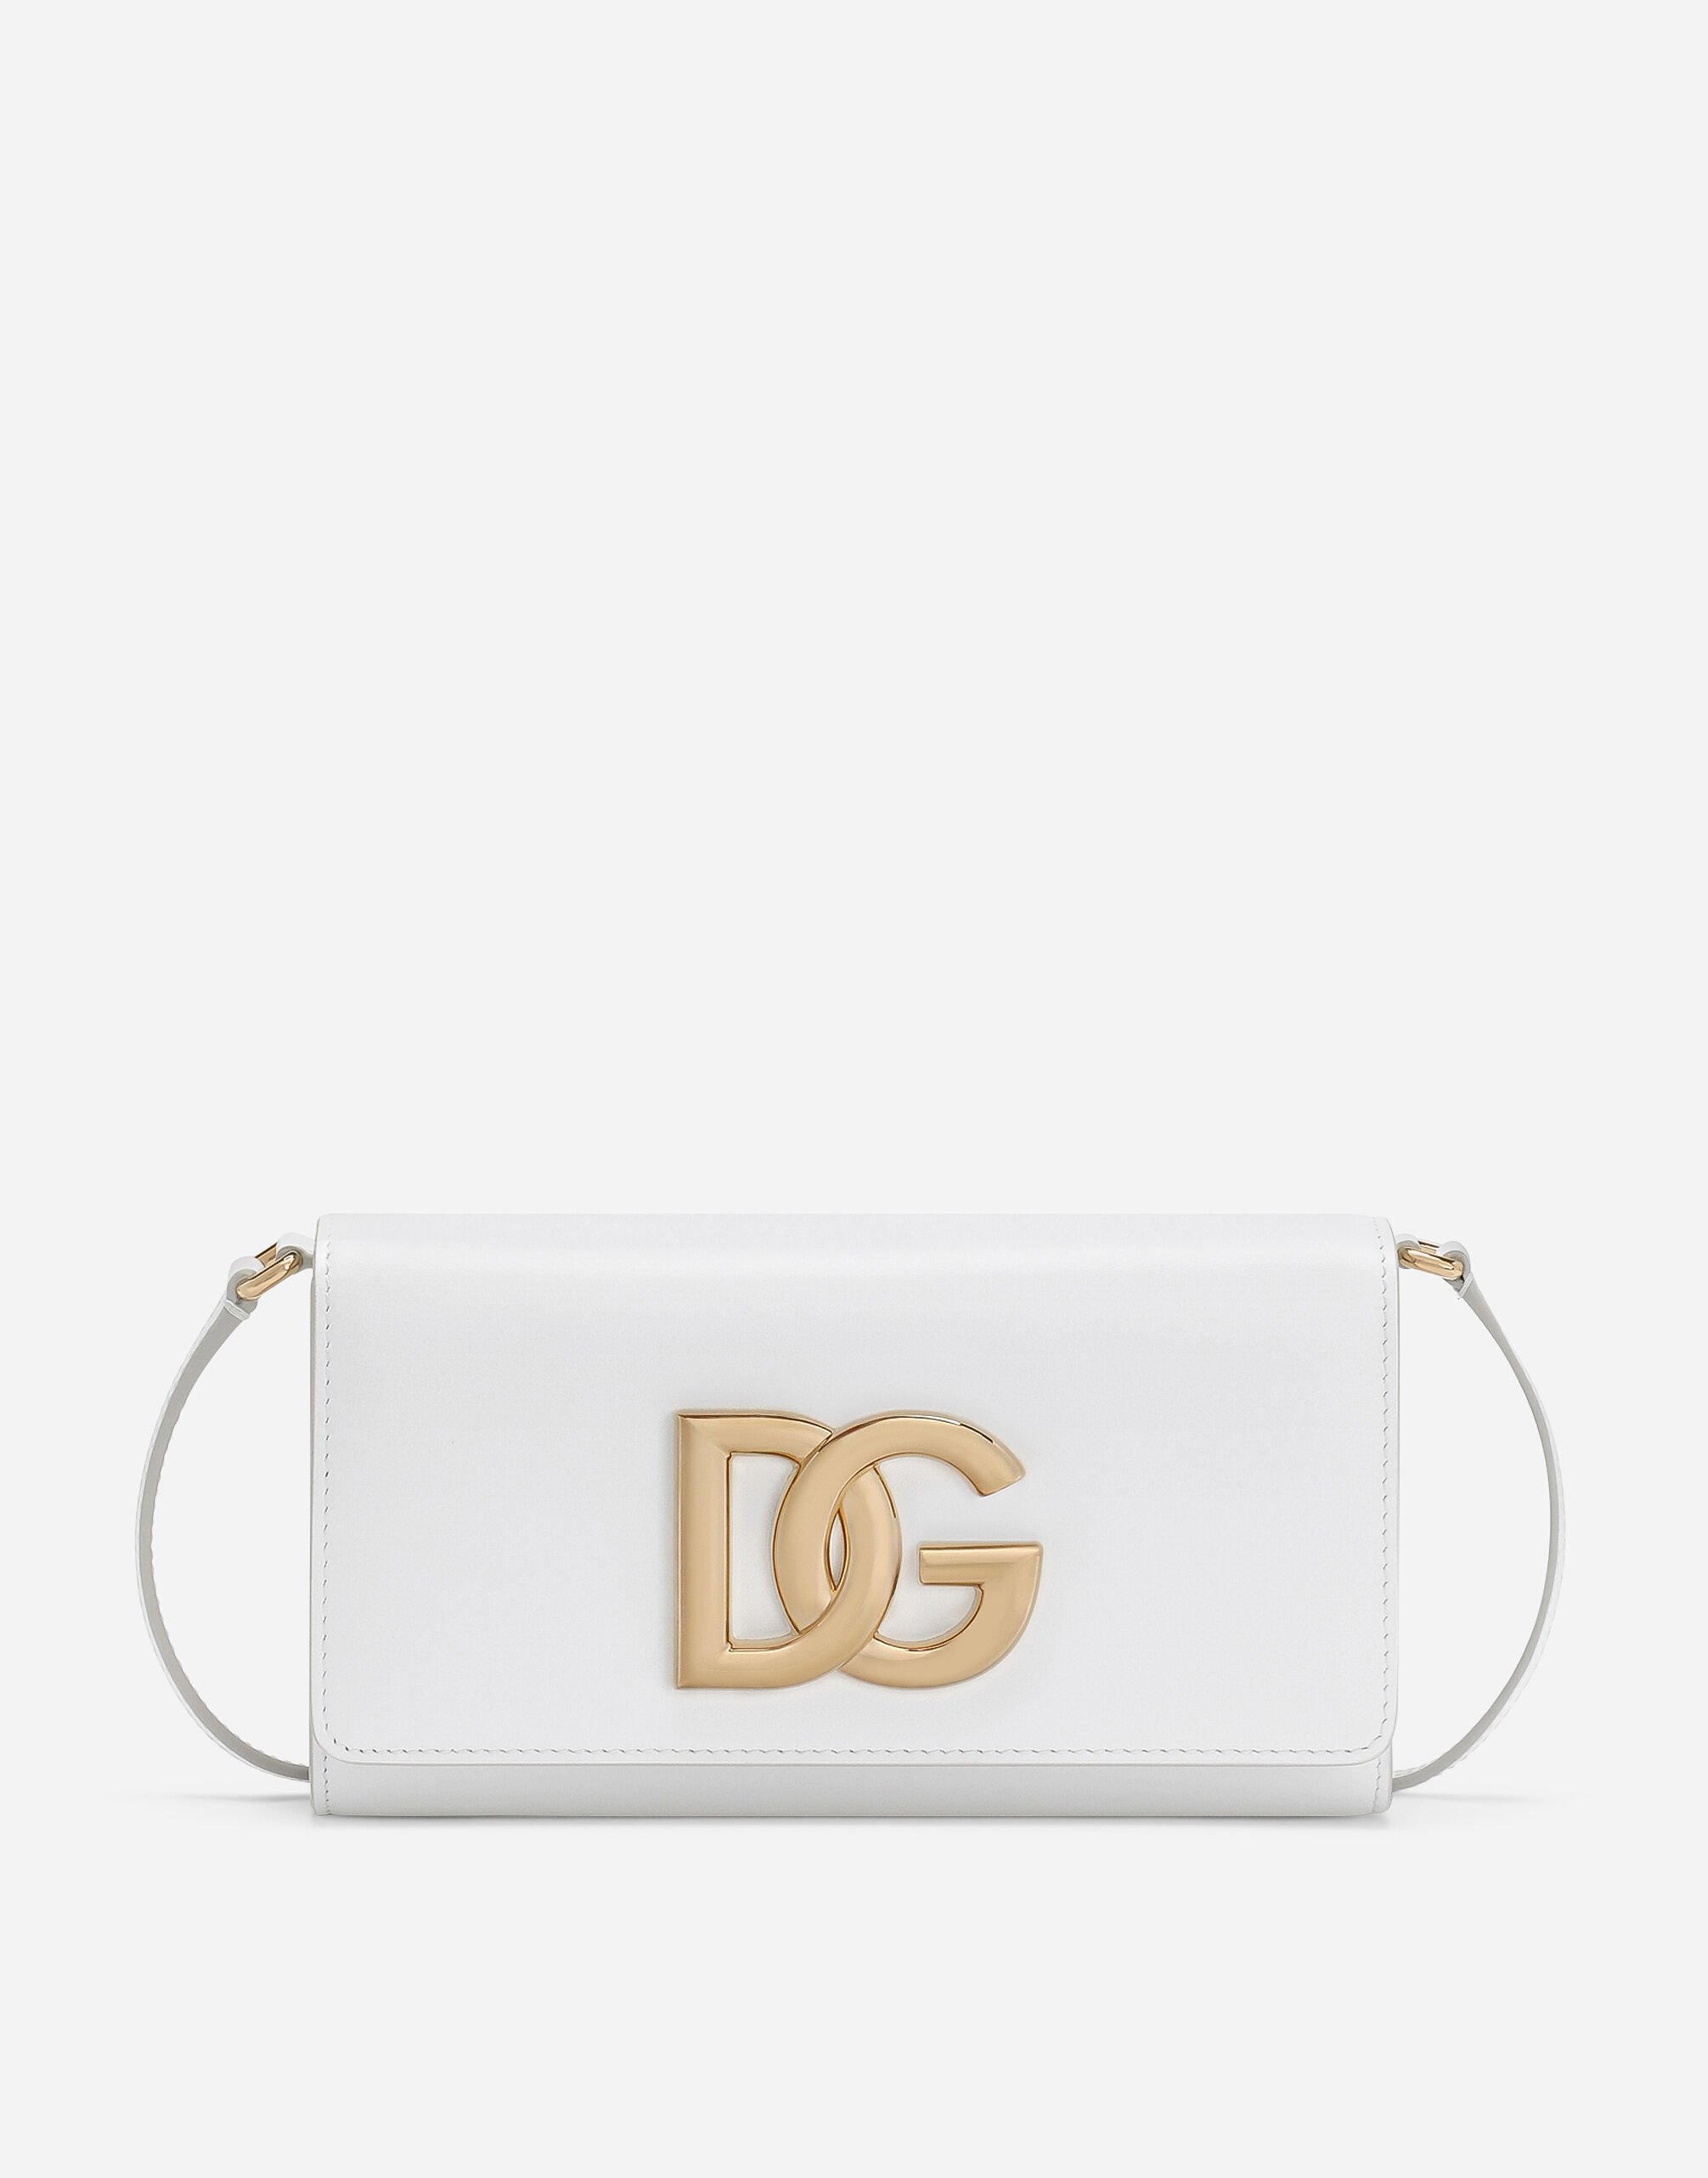 Dolce & Gabbana حقيبة كلاتش 3.5 من جلد عجل متعدد الألوان BB7655A4547